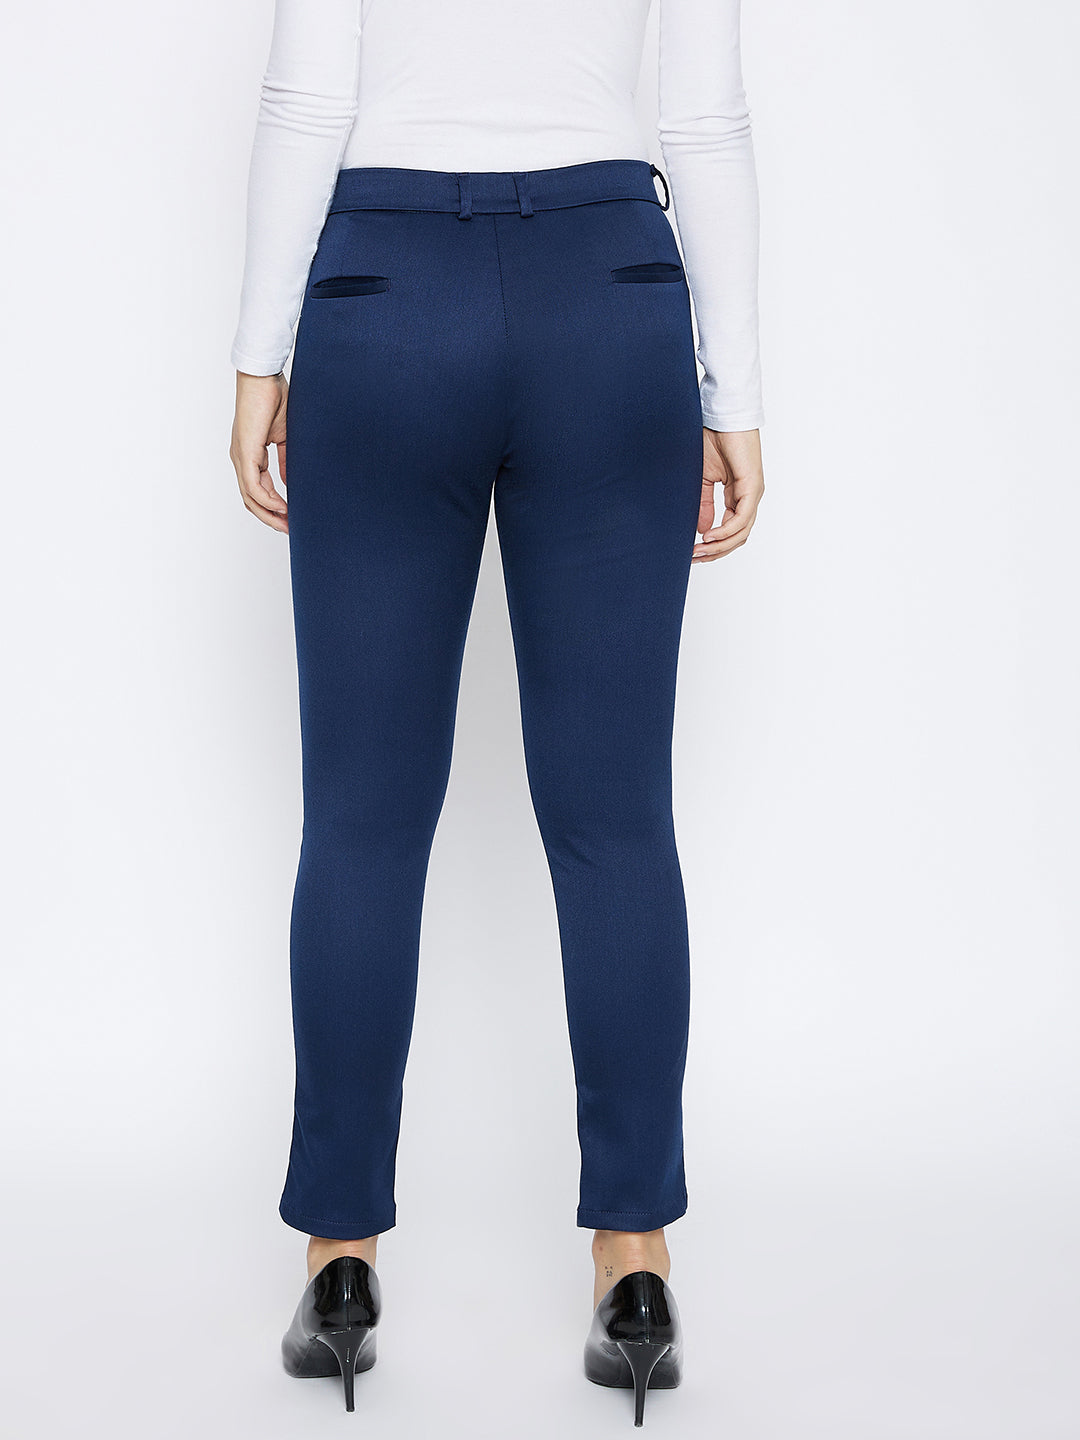 Navy Blue Slim Fit Trousers - Women Trousers